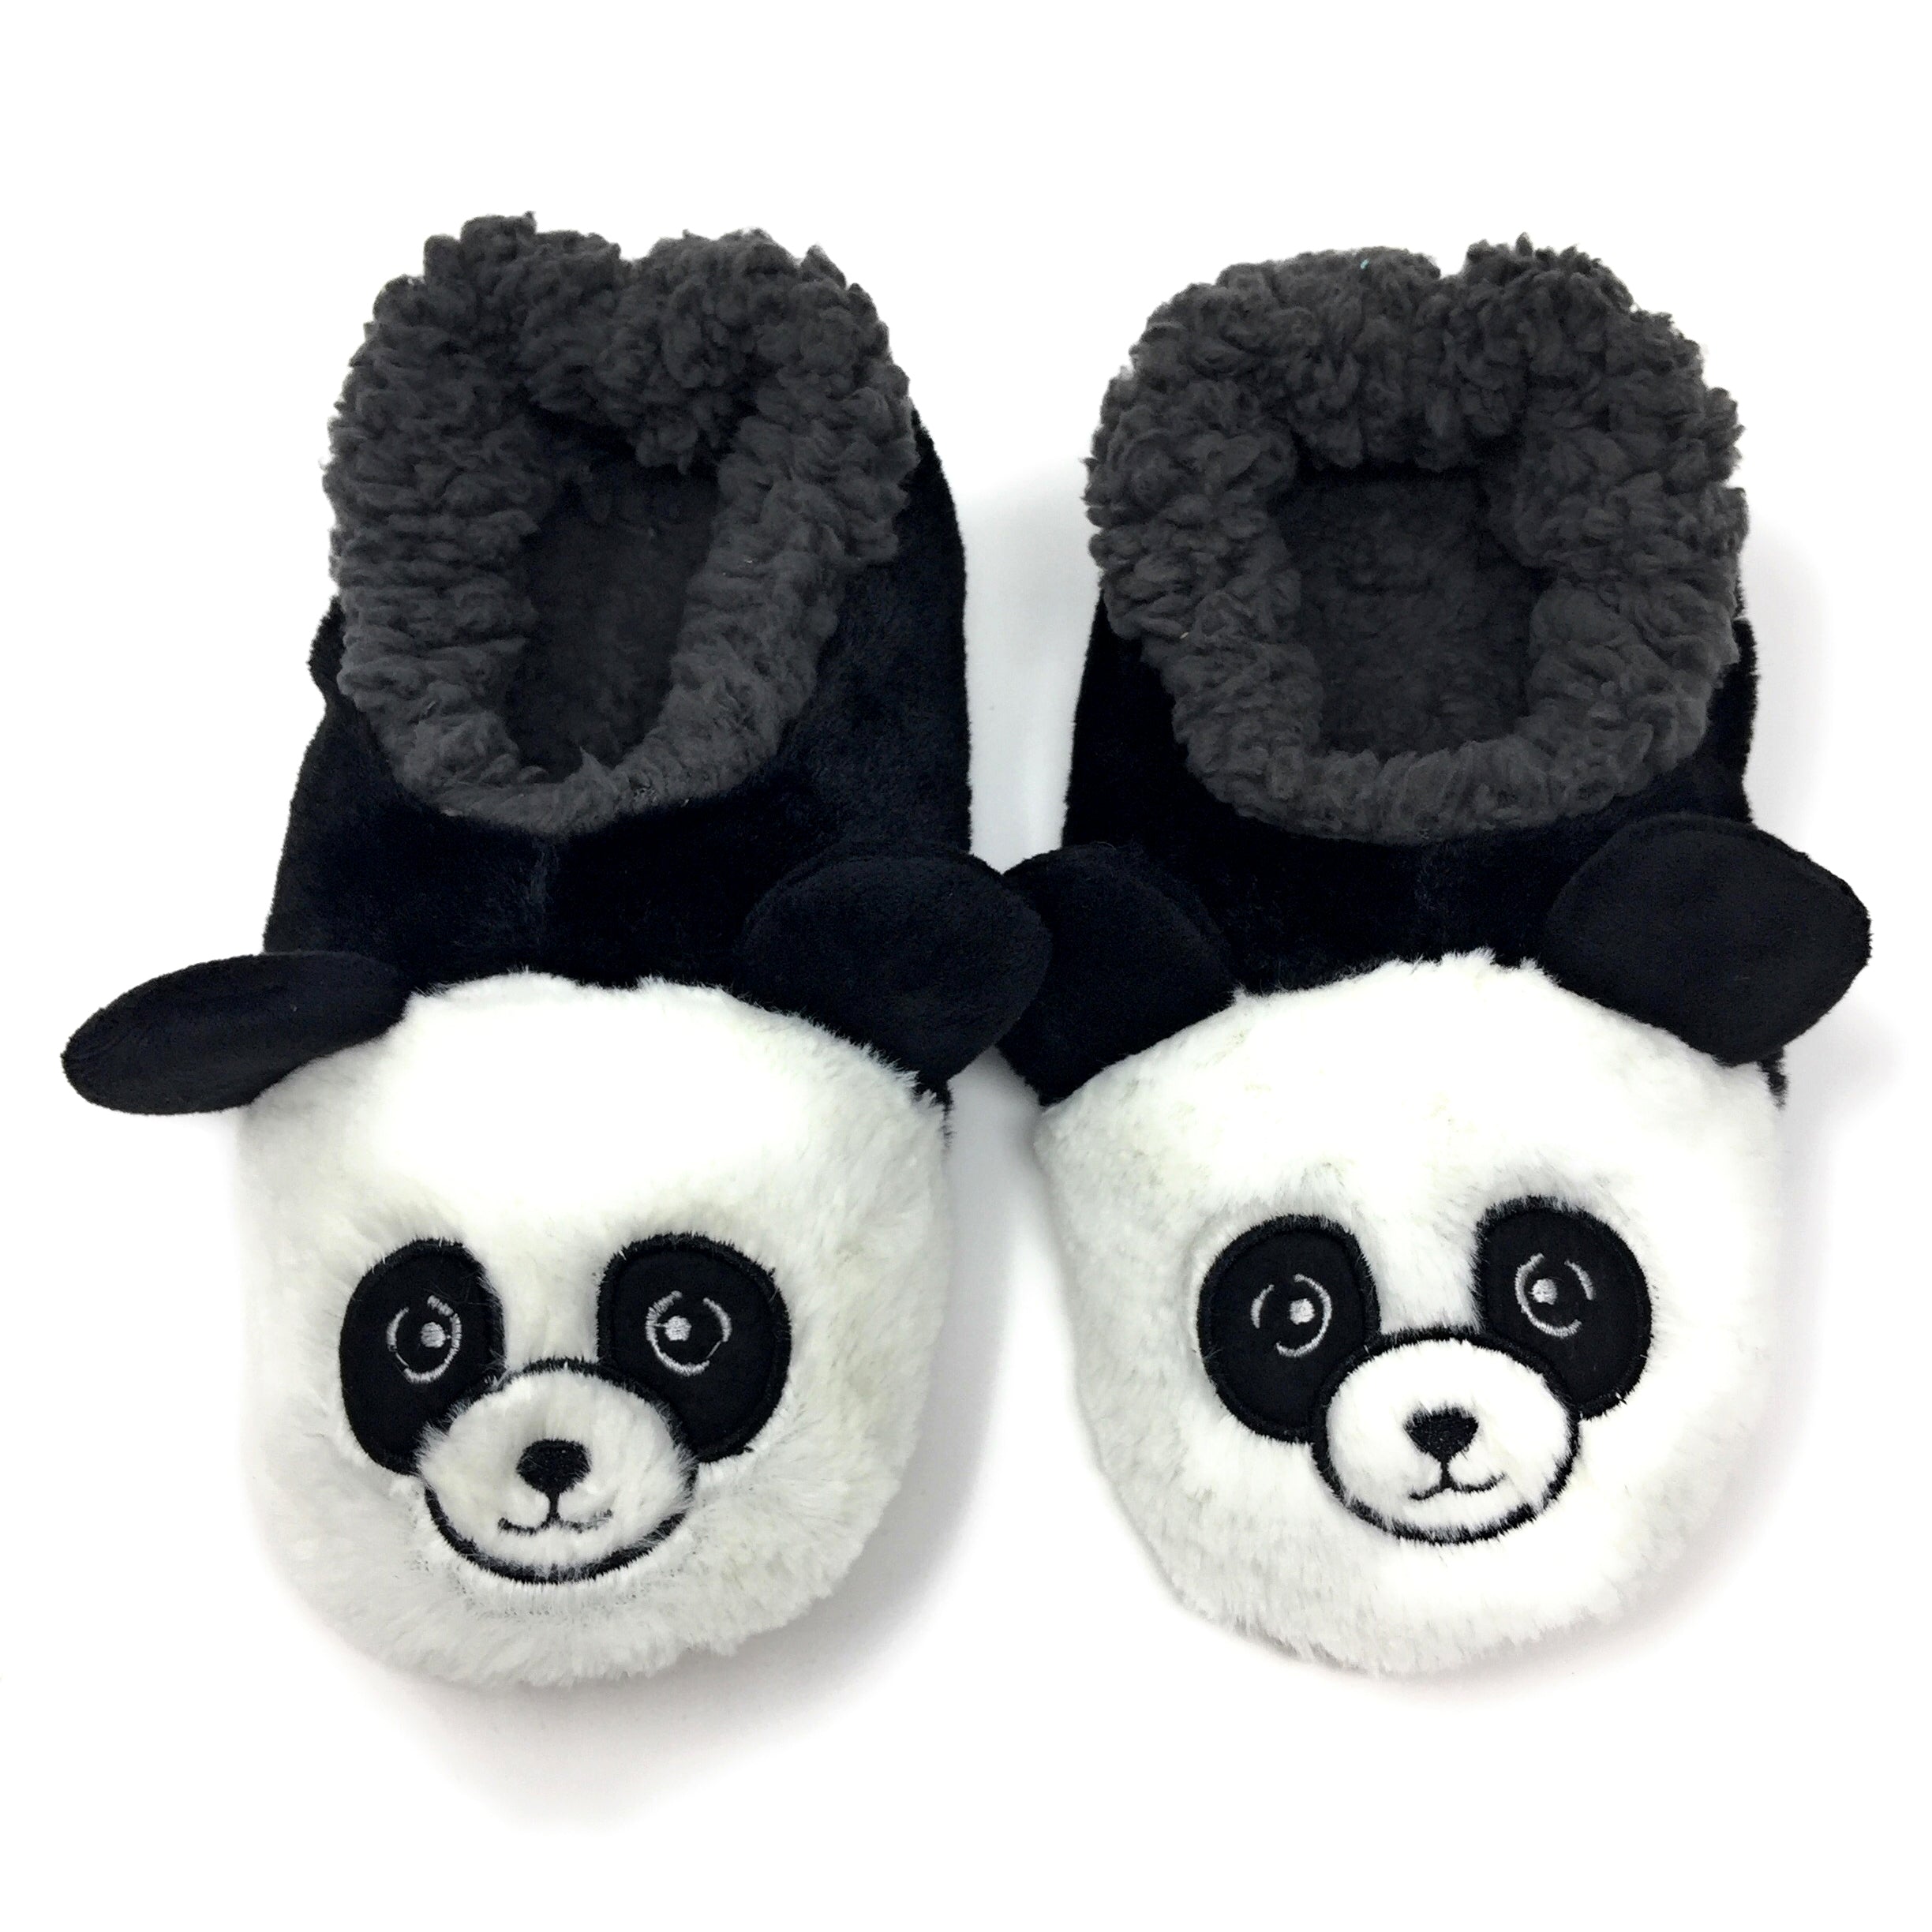 Fuzzy Bear Design Novelty Slippers